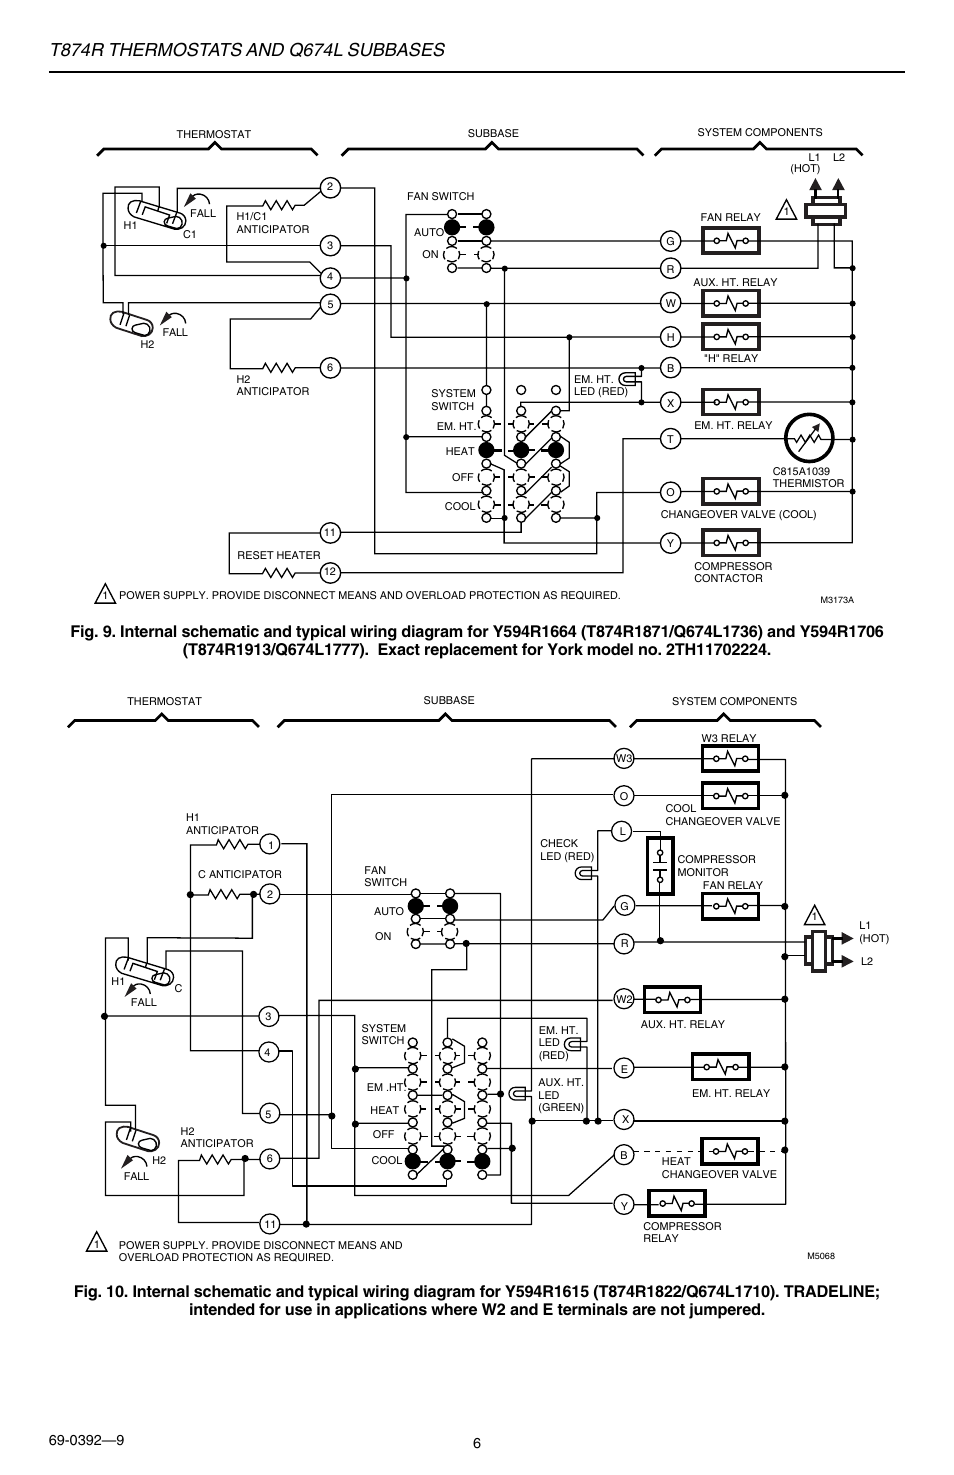 q674l wiring diagram